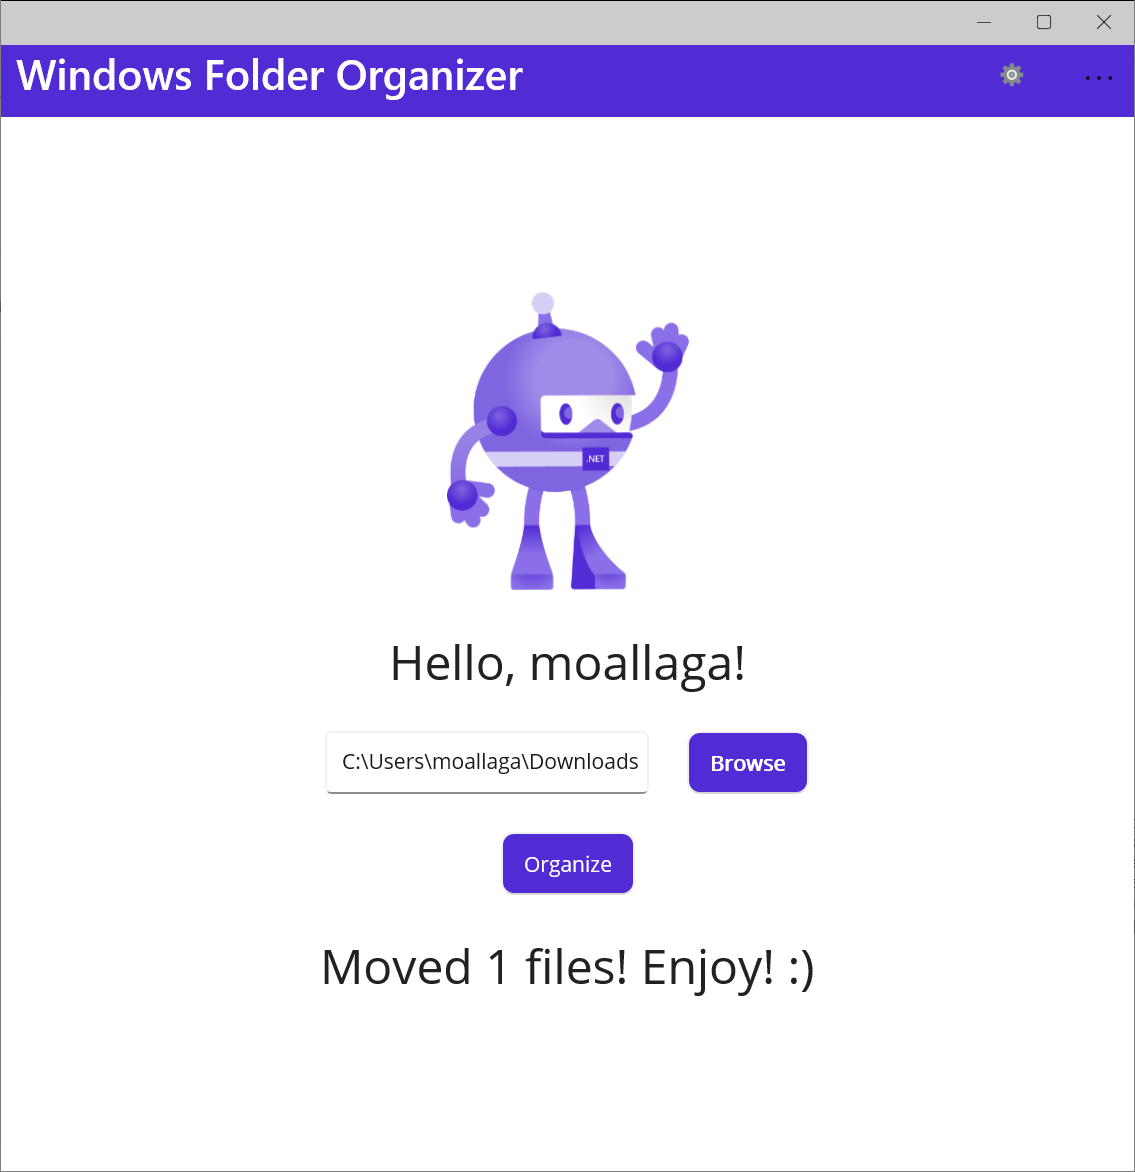 Windows Folder Organizer